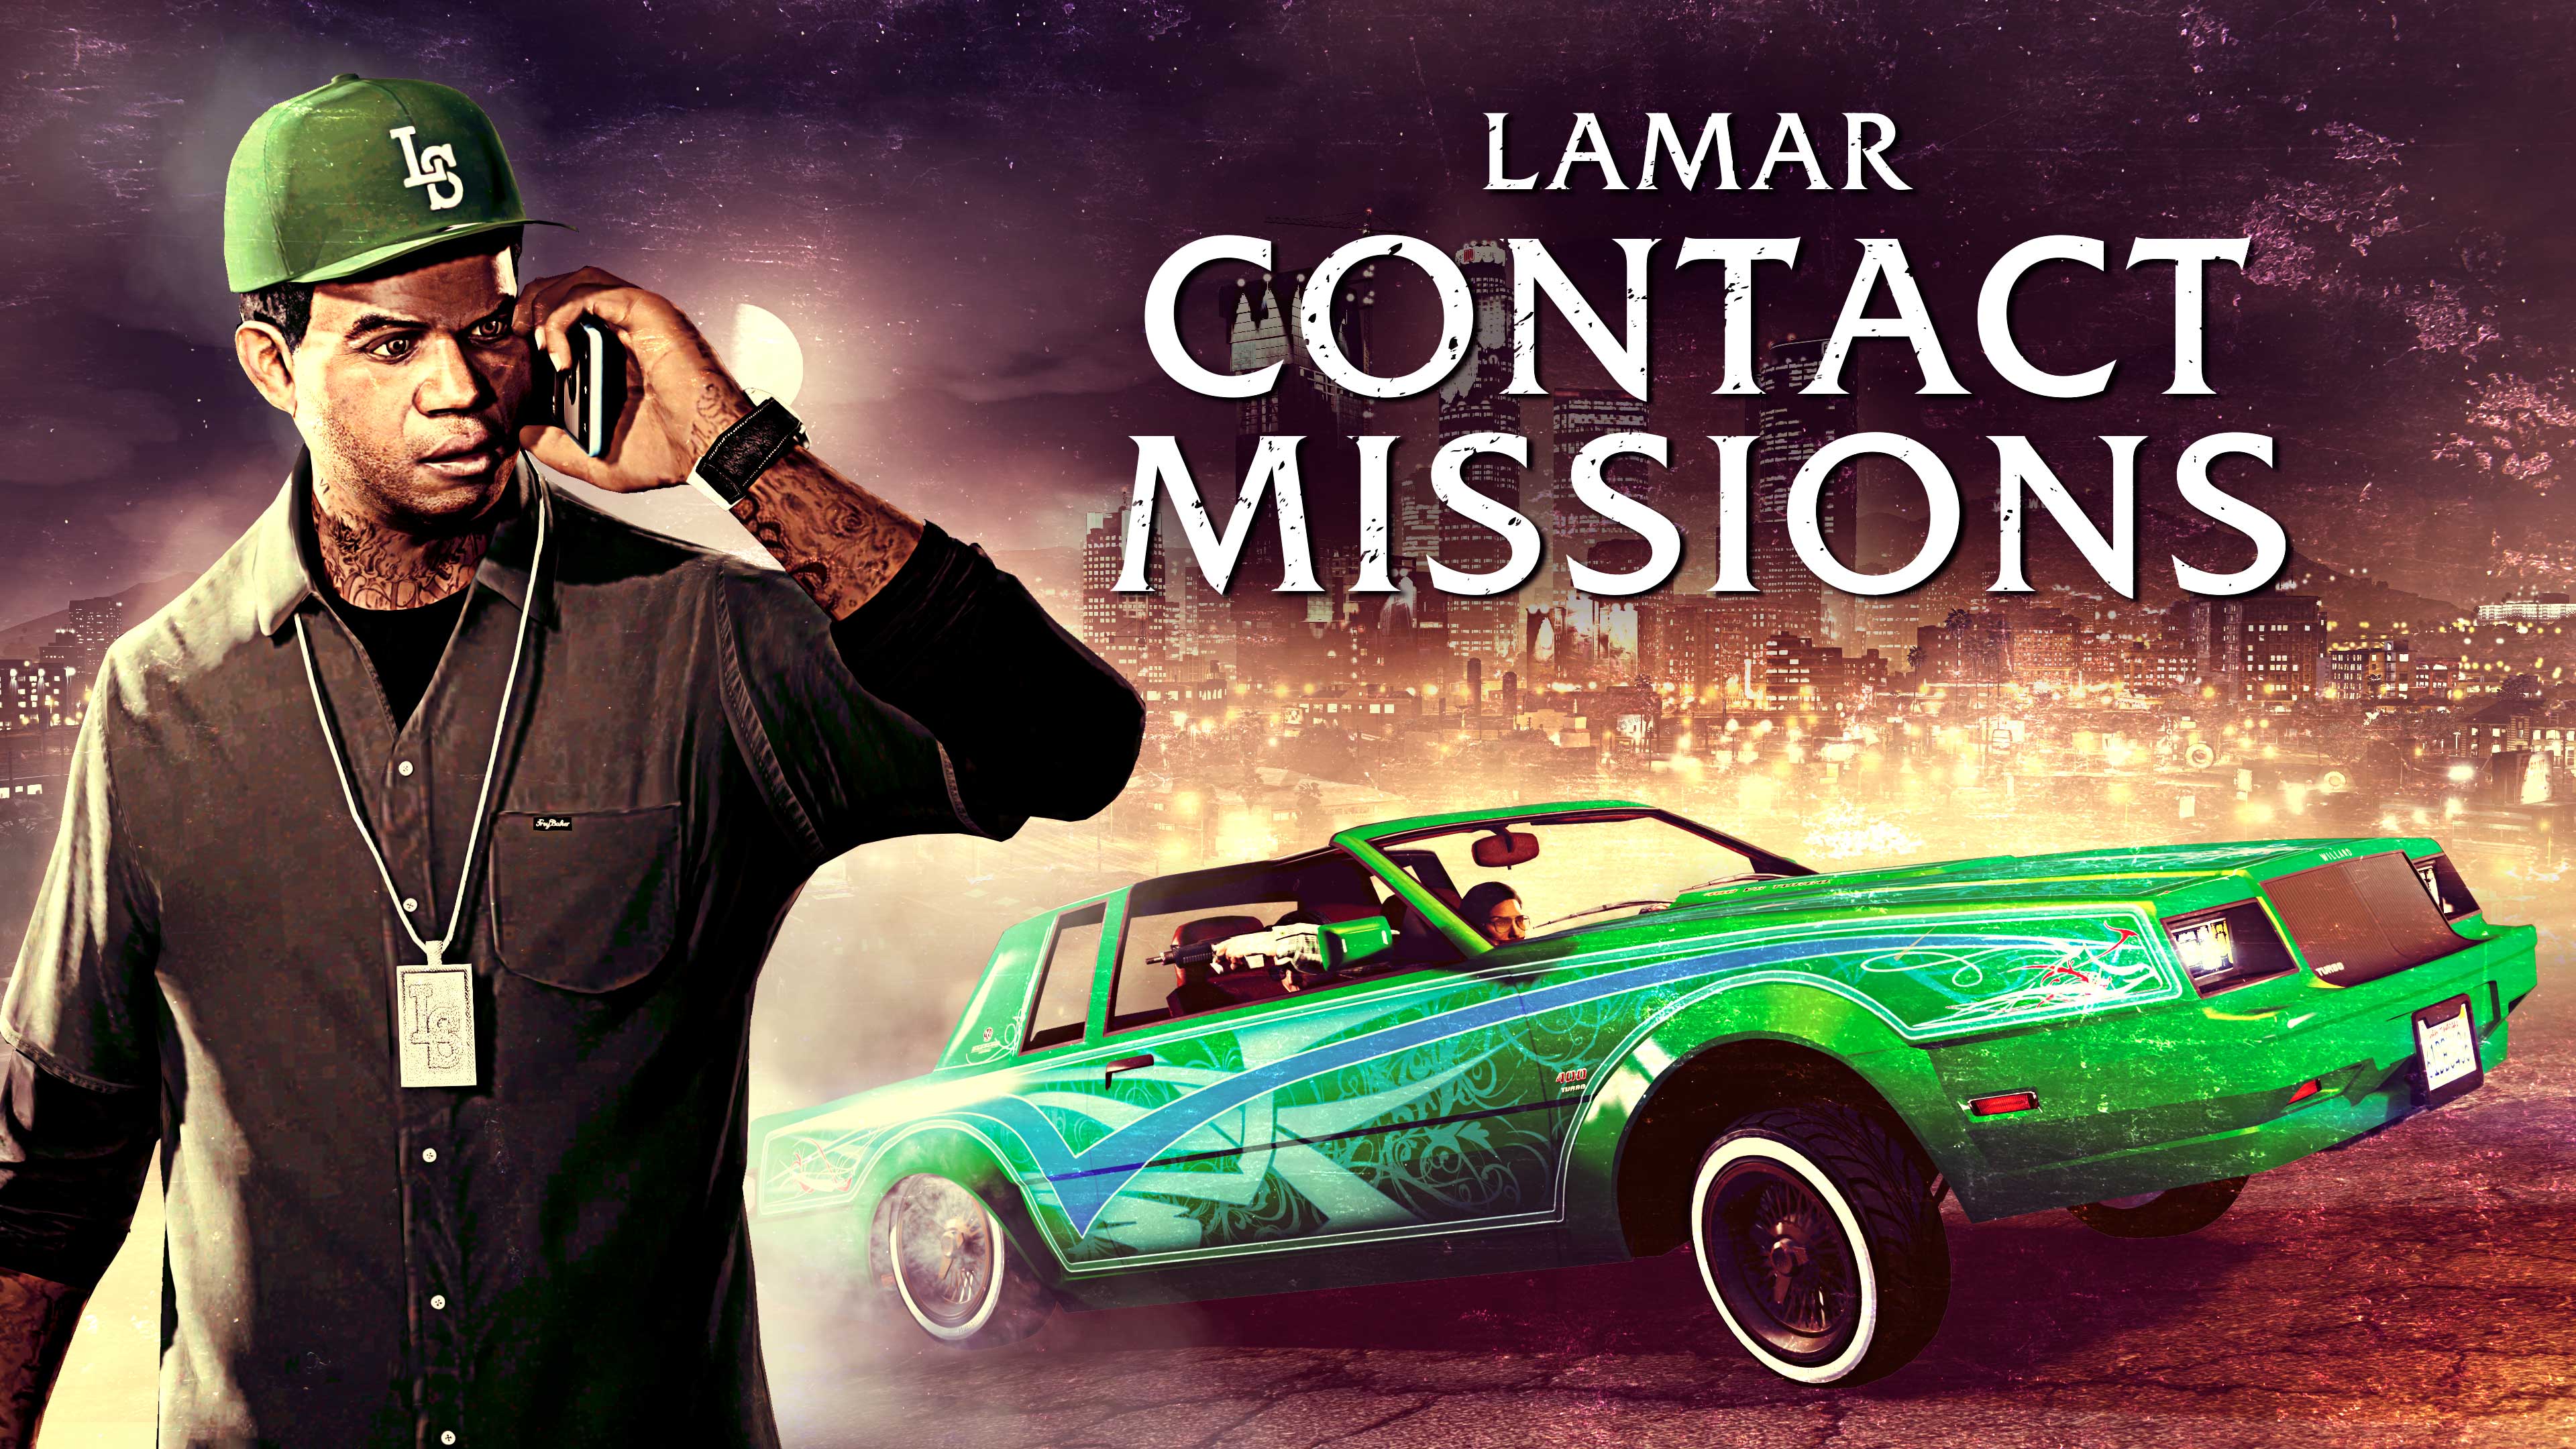 gta online lamar contact missions image 6